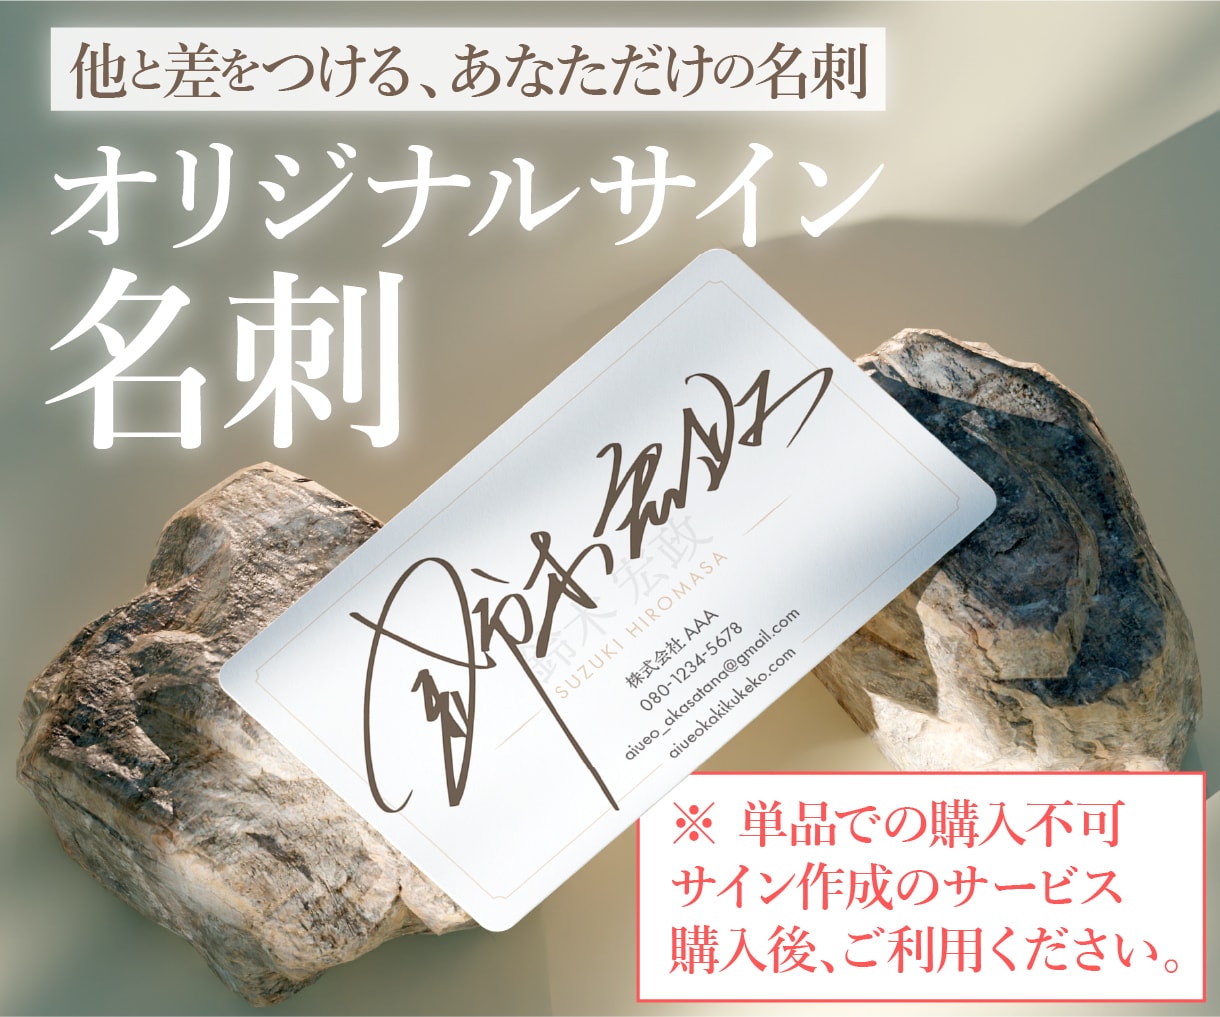 💬Coconara｜After creating your signature, we will create a signed business card Kima Hashima Designer/Illustrator 5.0…